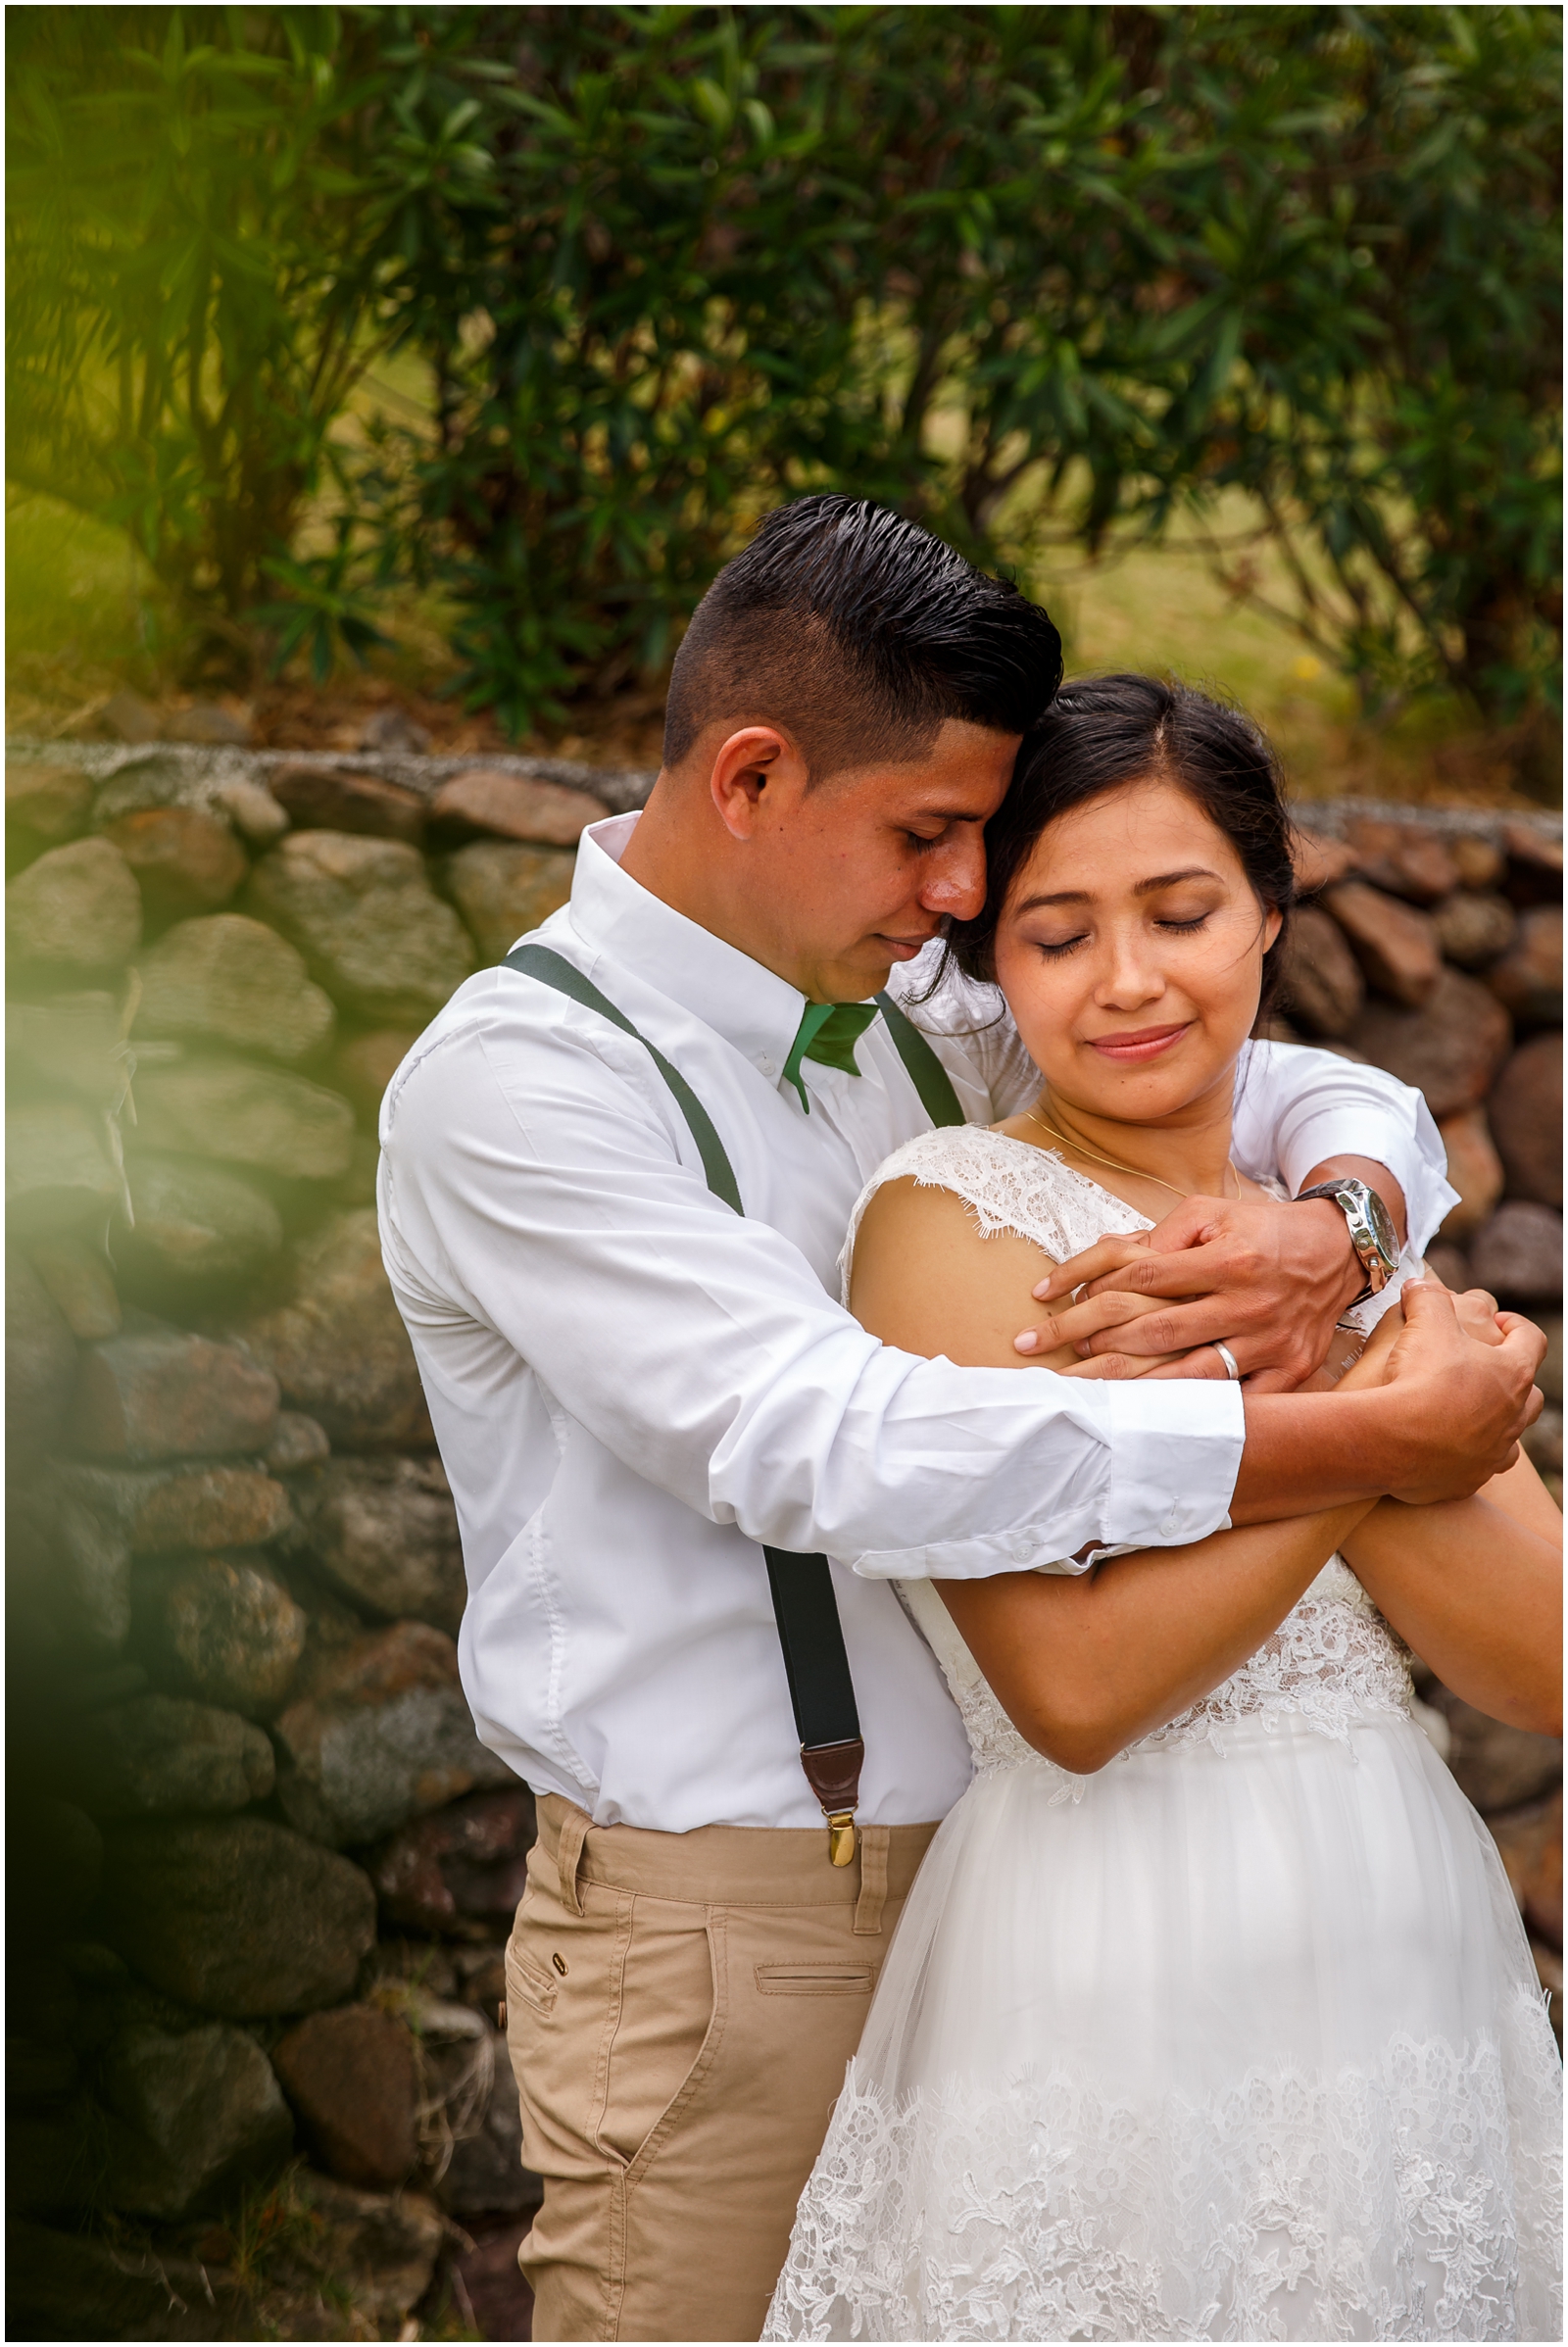 A couple cuddling on their adventurous Nicaraguan wedding day.